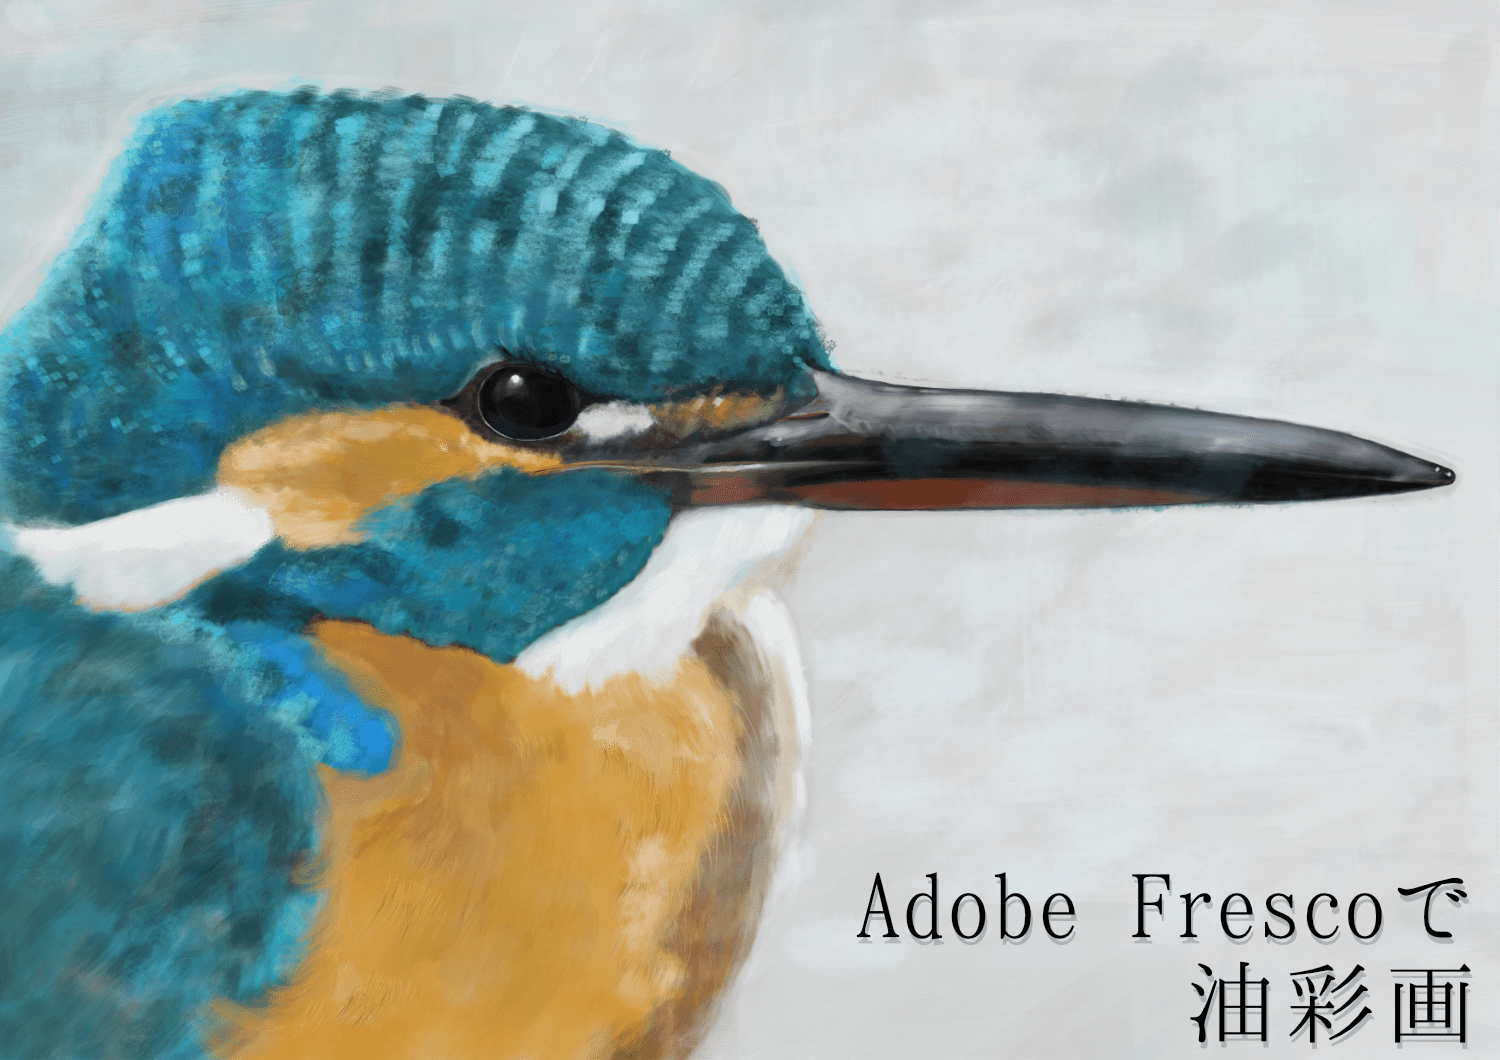 Adobe Frescoで油彩画を描いてみました